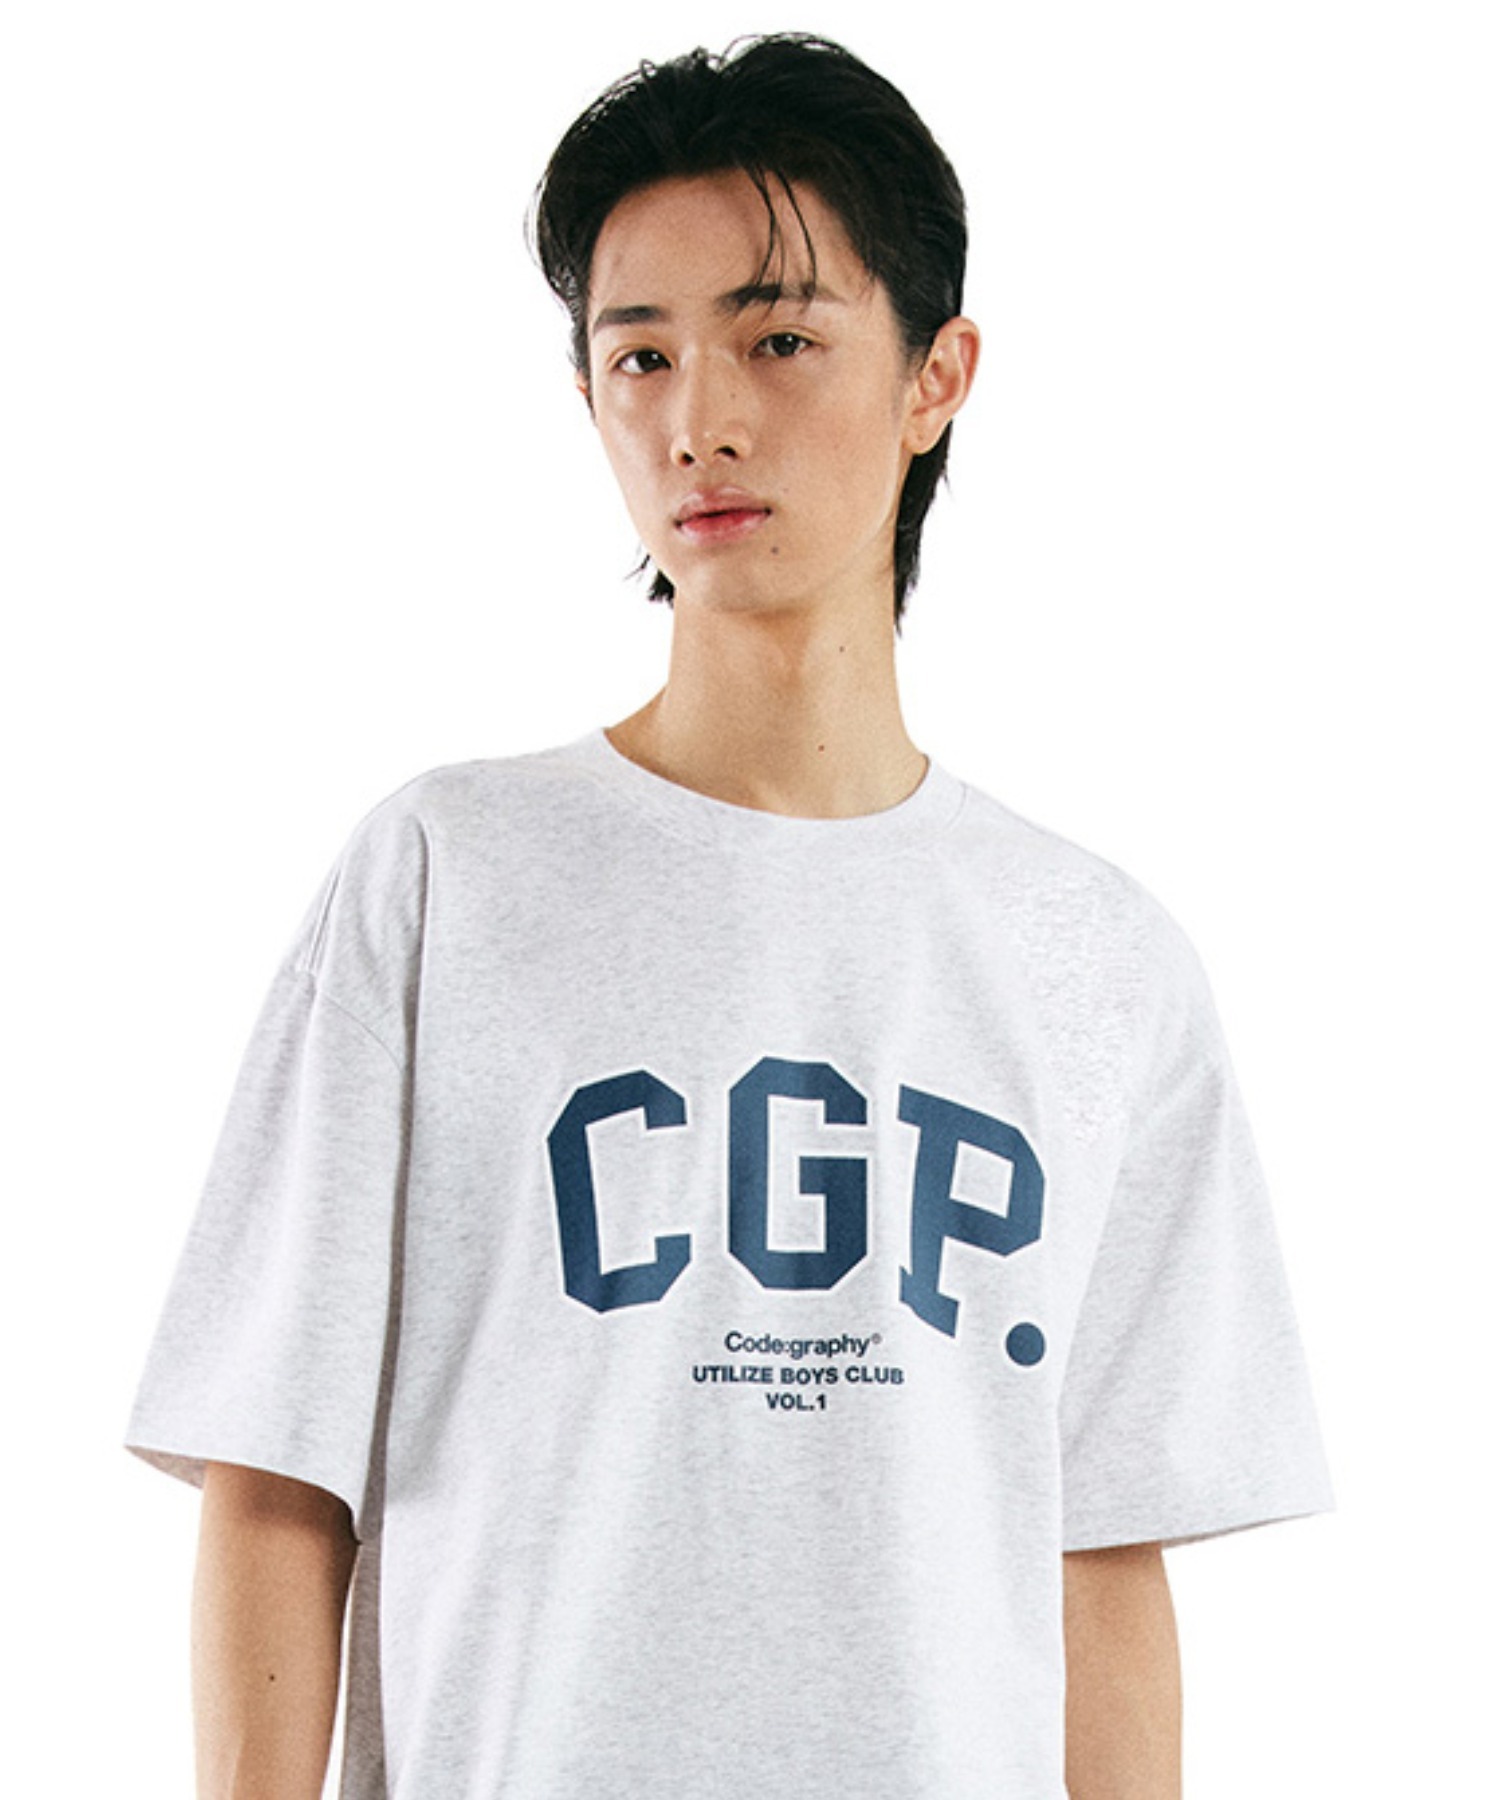 A'GEM/9 × .kom『Code:graphy/コードグラフィー』CGP Arch logo T-shirt/クールコットン素材 半袖Tシャツ